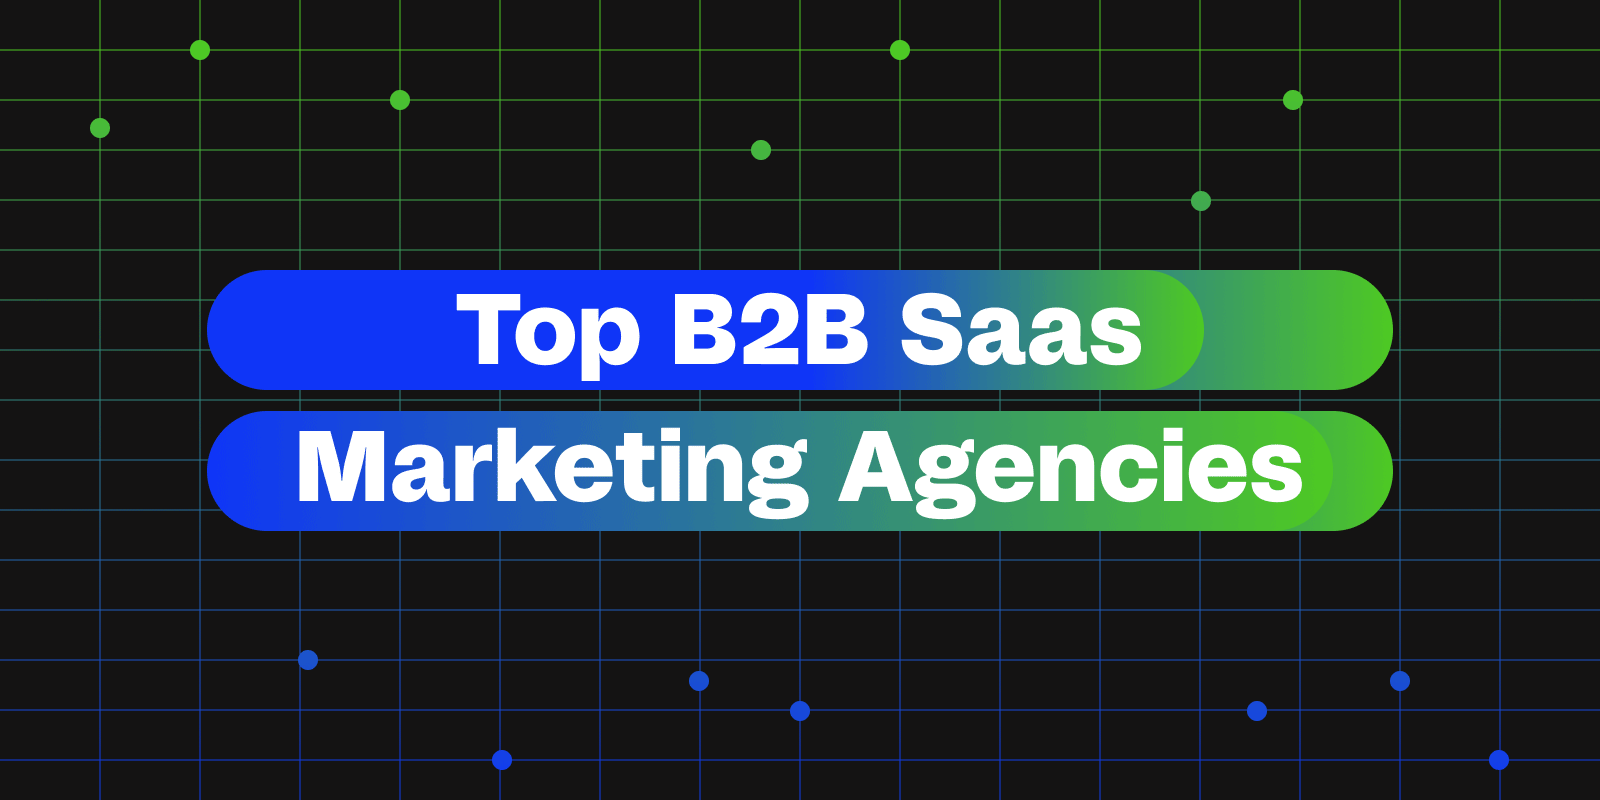 Top B2B Saas Marketing Agencies